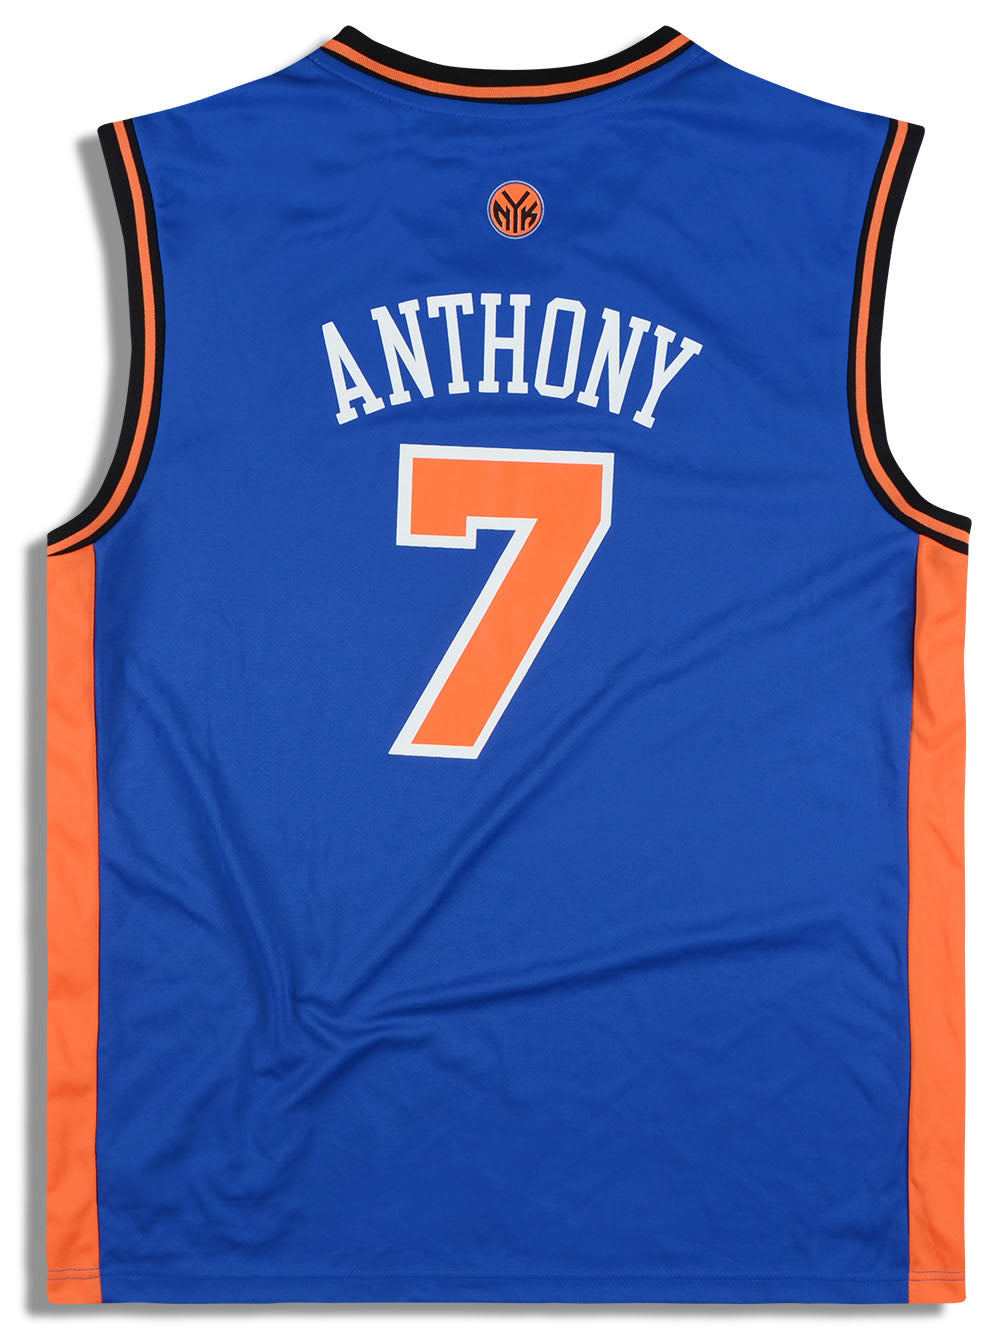 NBA_ jersey Mitchell Ness Vintage Basketball Carmelo Anthony